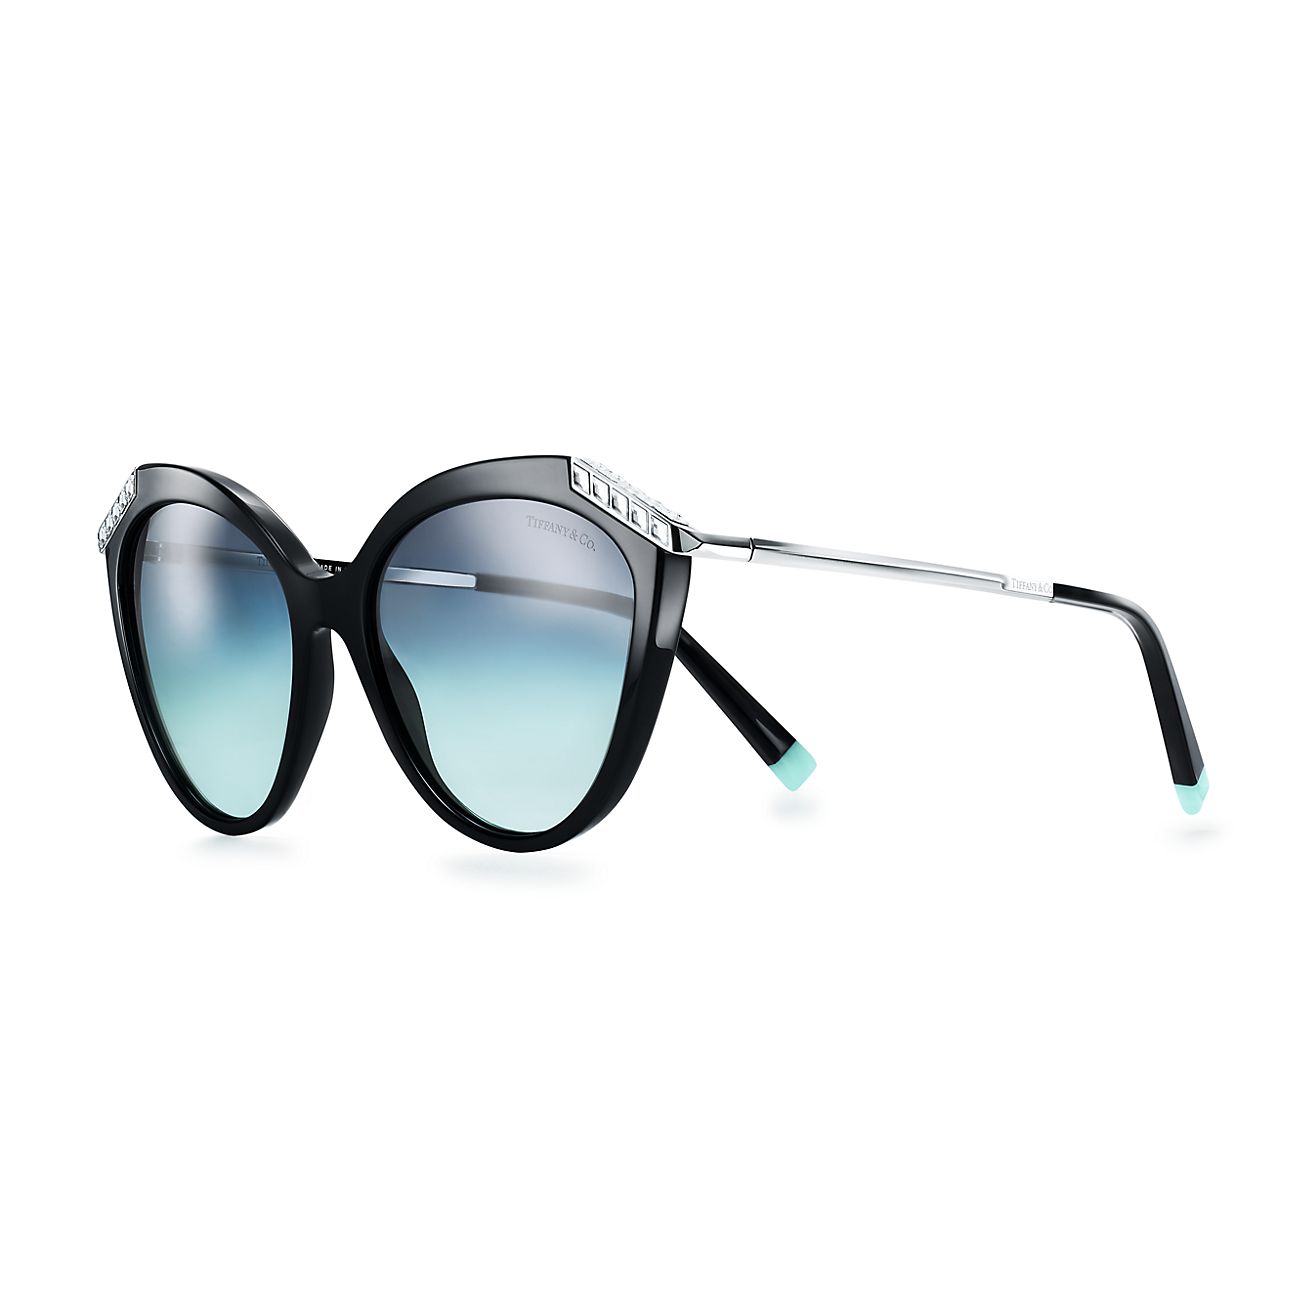 black tiffany sunglasses